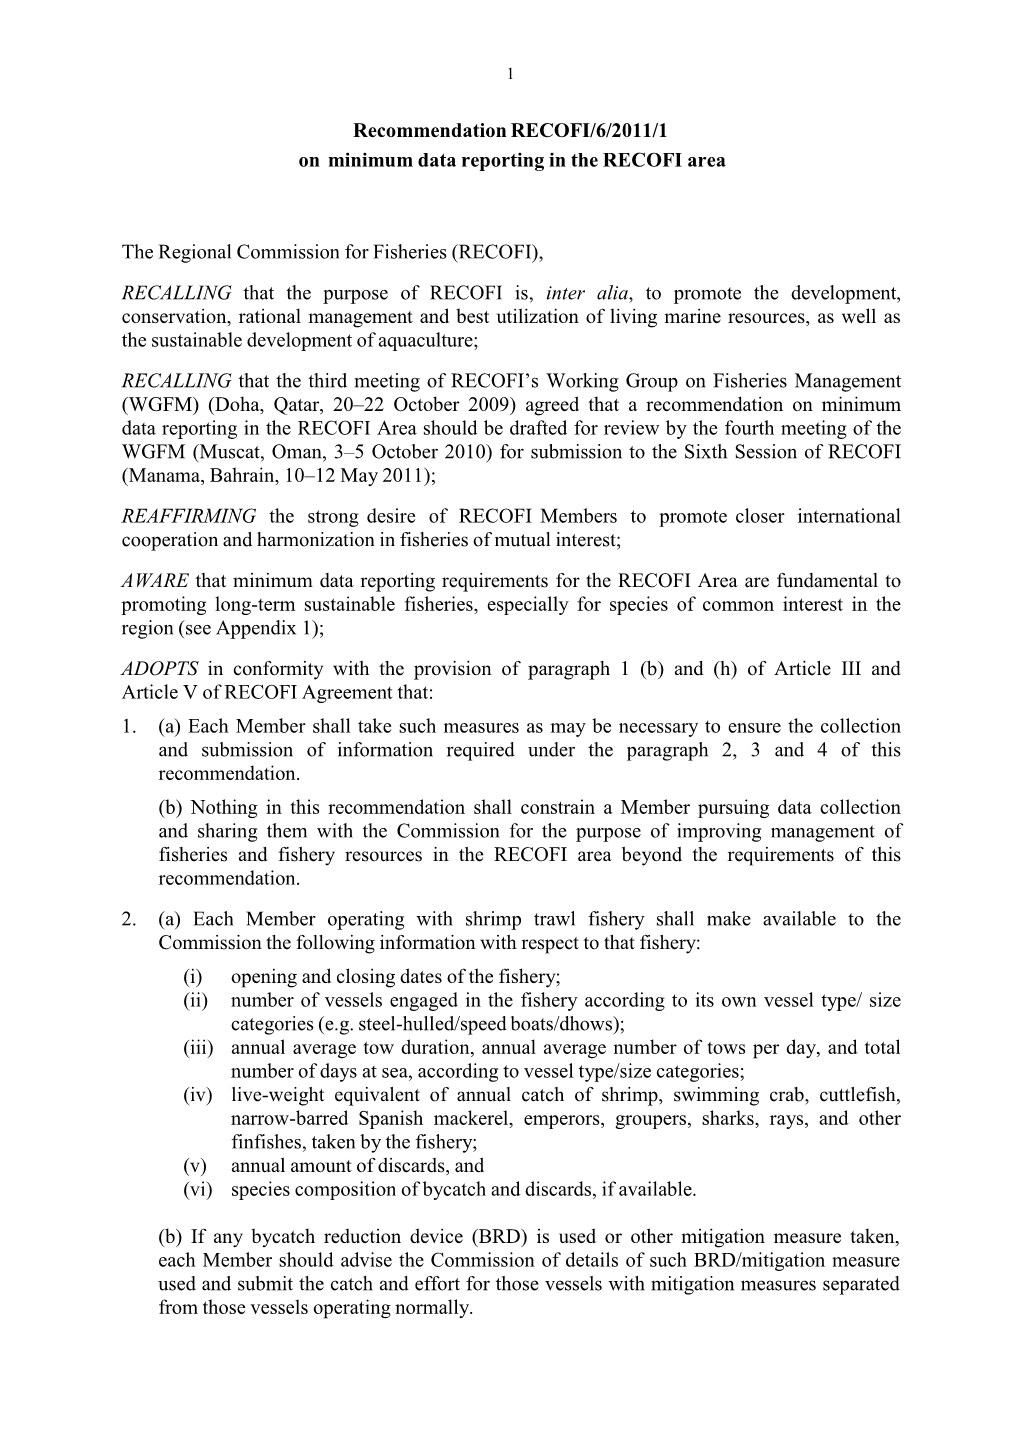 Recommendation RECOFI/6/2011/1 on Minimum Data Reporting in the RECOFI Area